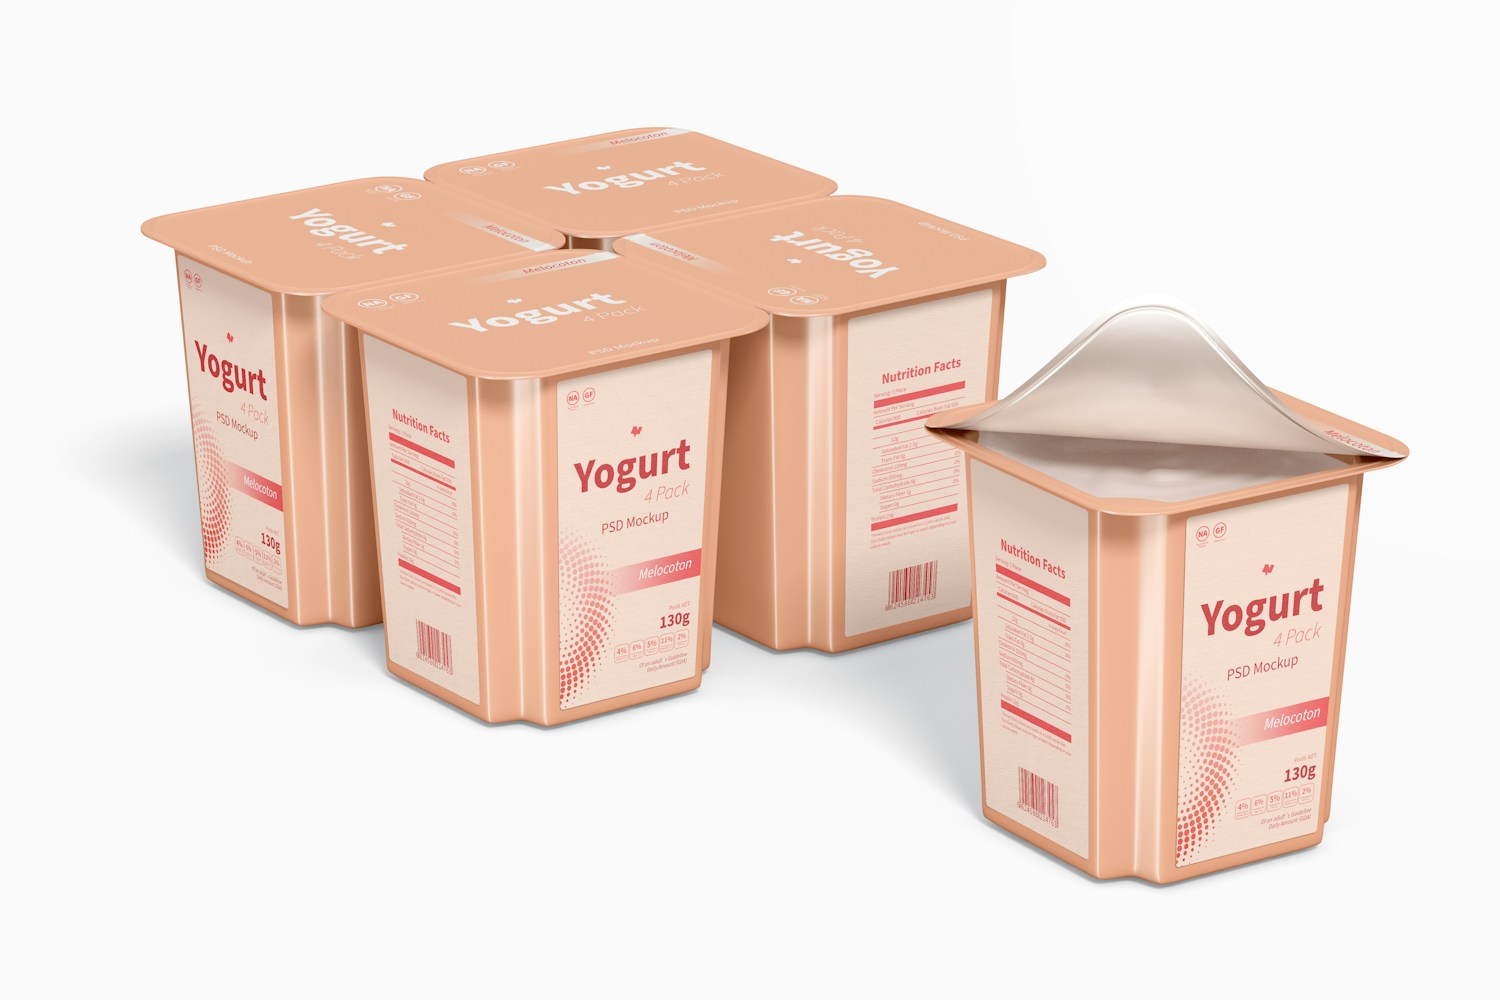 Yogurt 4 Pack Mockup, Perspective